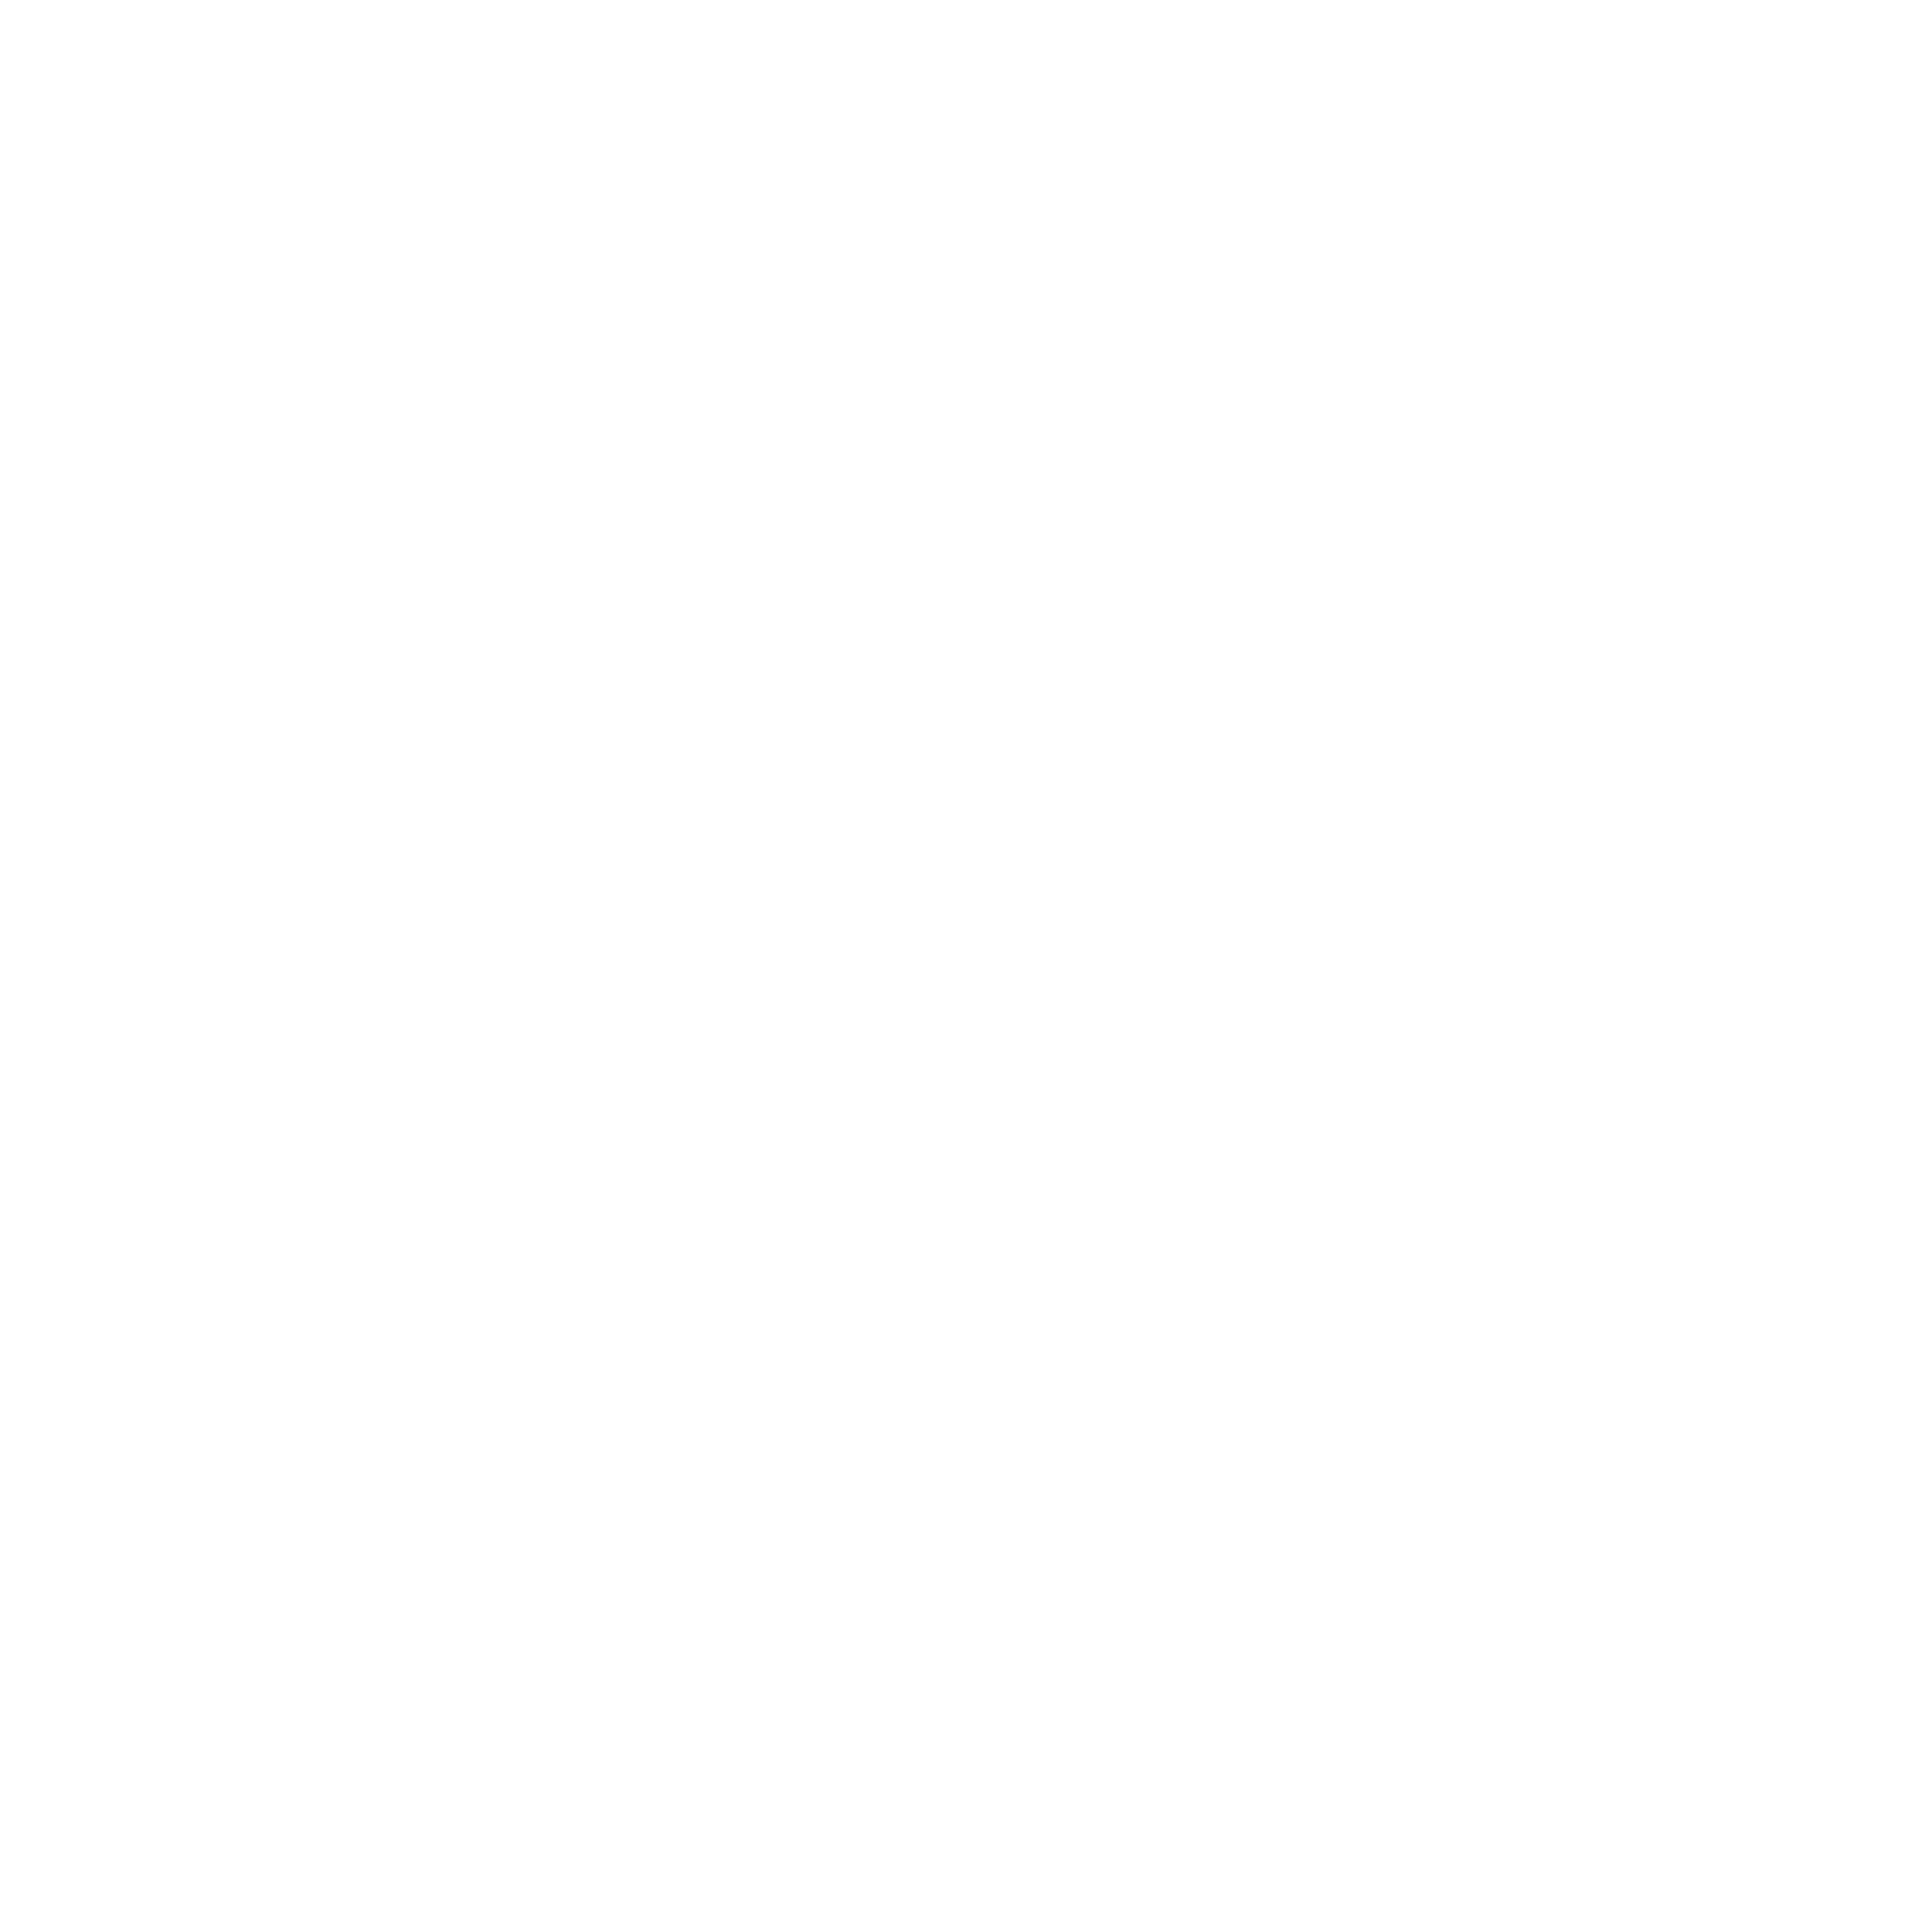 Hart-logos-black-trans7.png